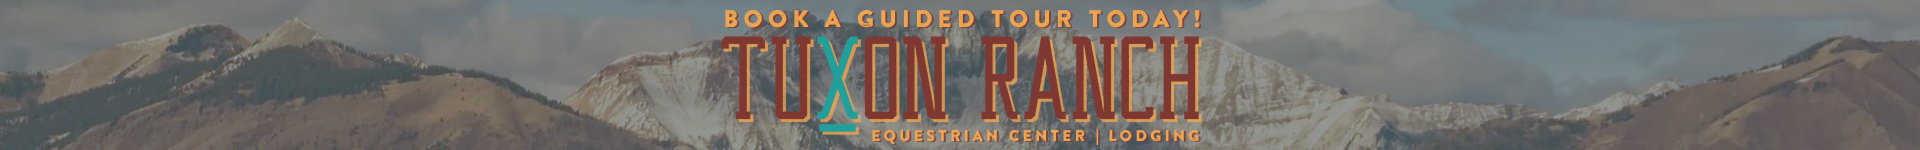 tuxon ranch tour banner